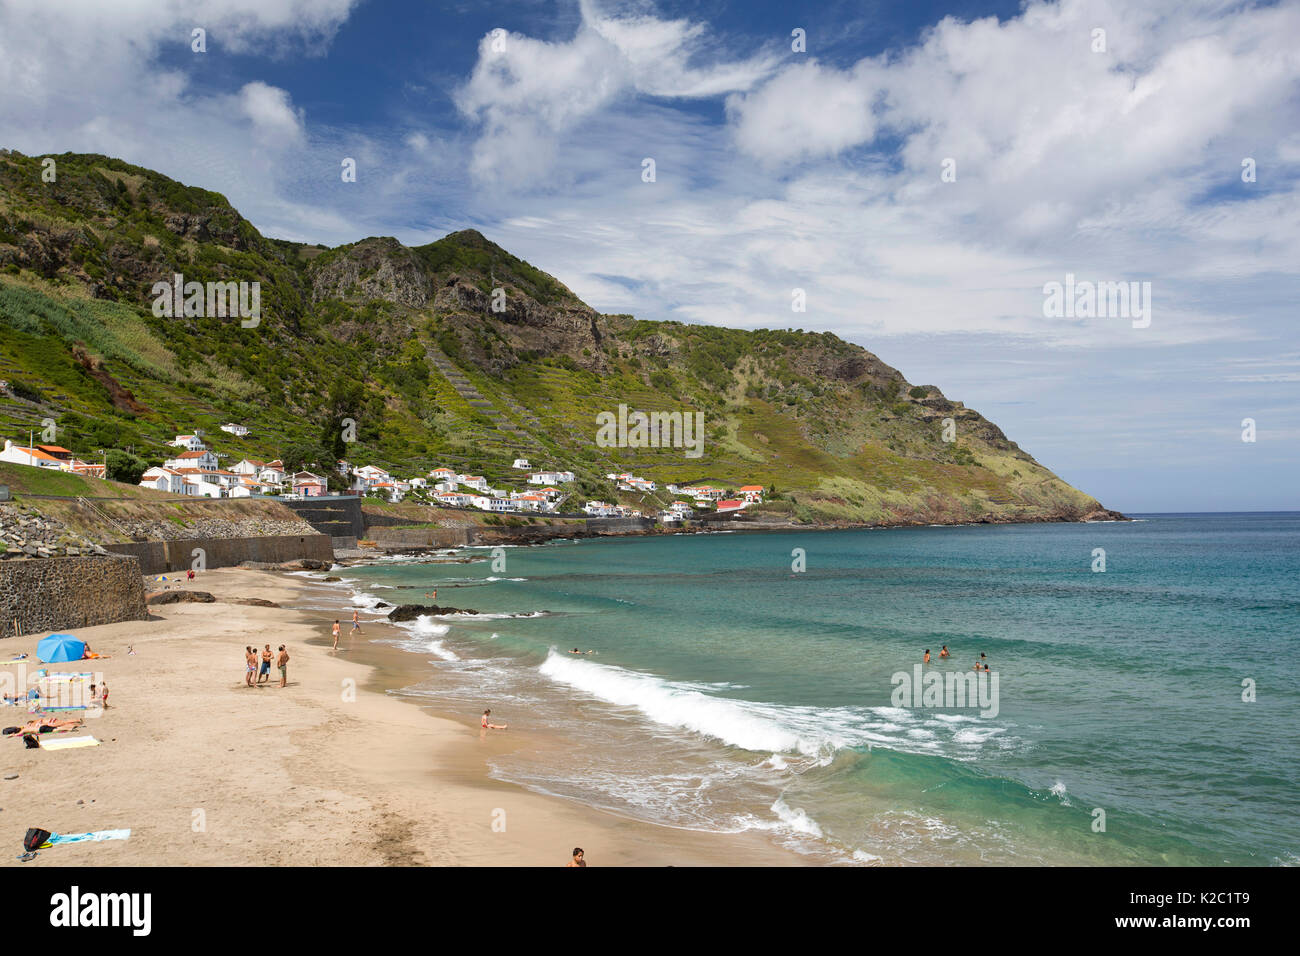 Sao Lourenco Bucht, Strand im Nordosten der Insel Santa Maria, Azoren, Portugal, Atlantik, August 2014. Stockfoto